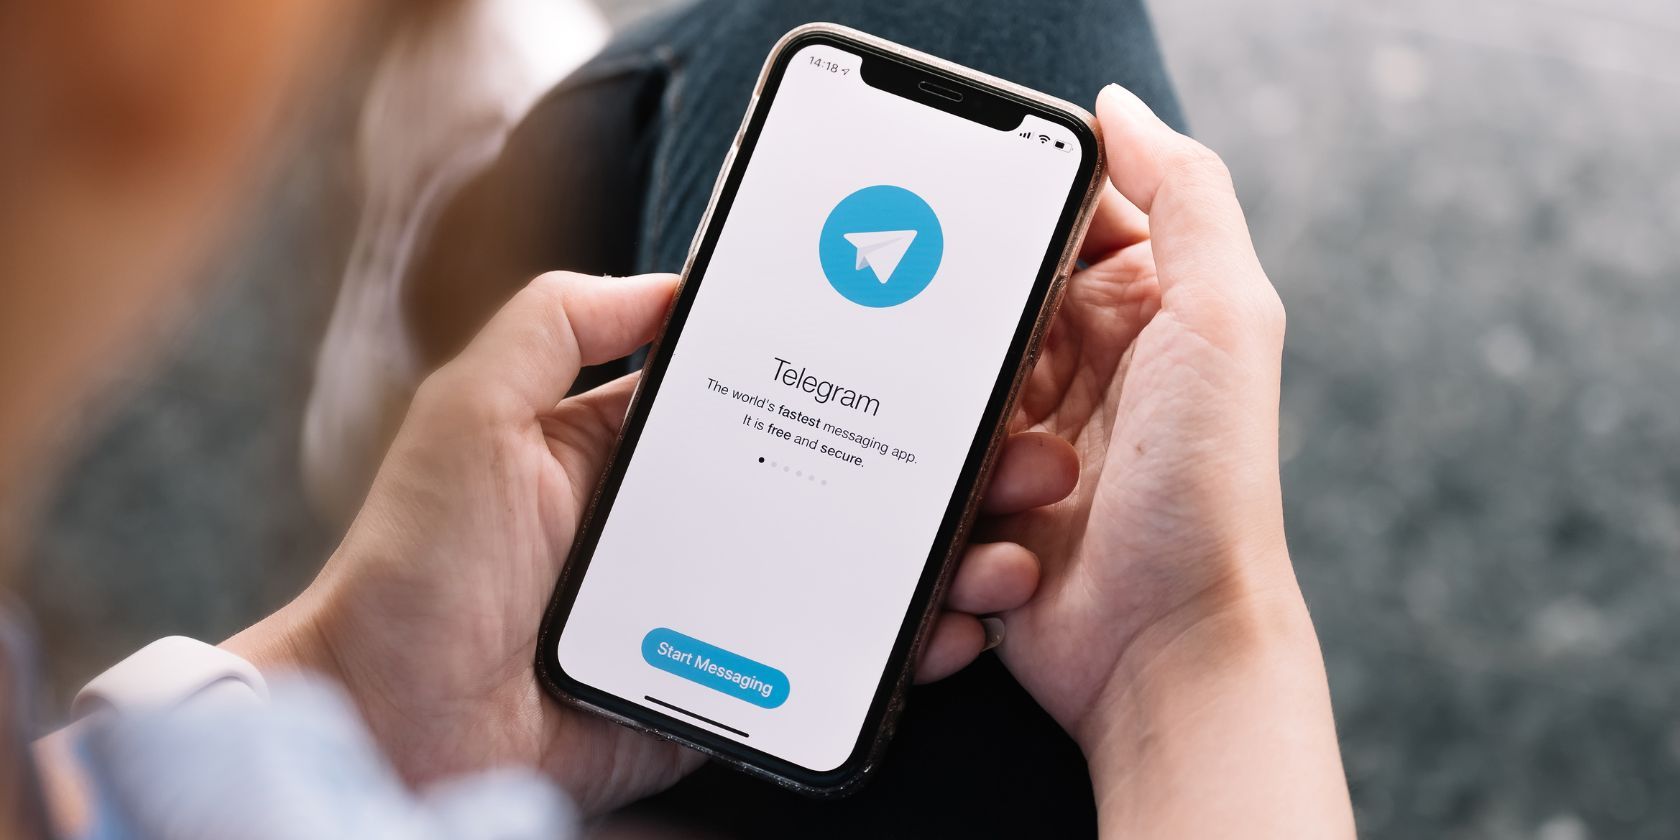 the telegram app on a smartphone